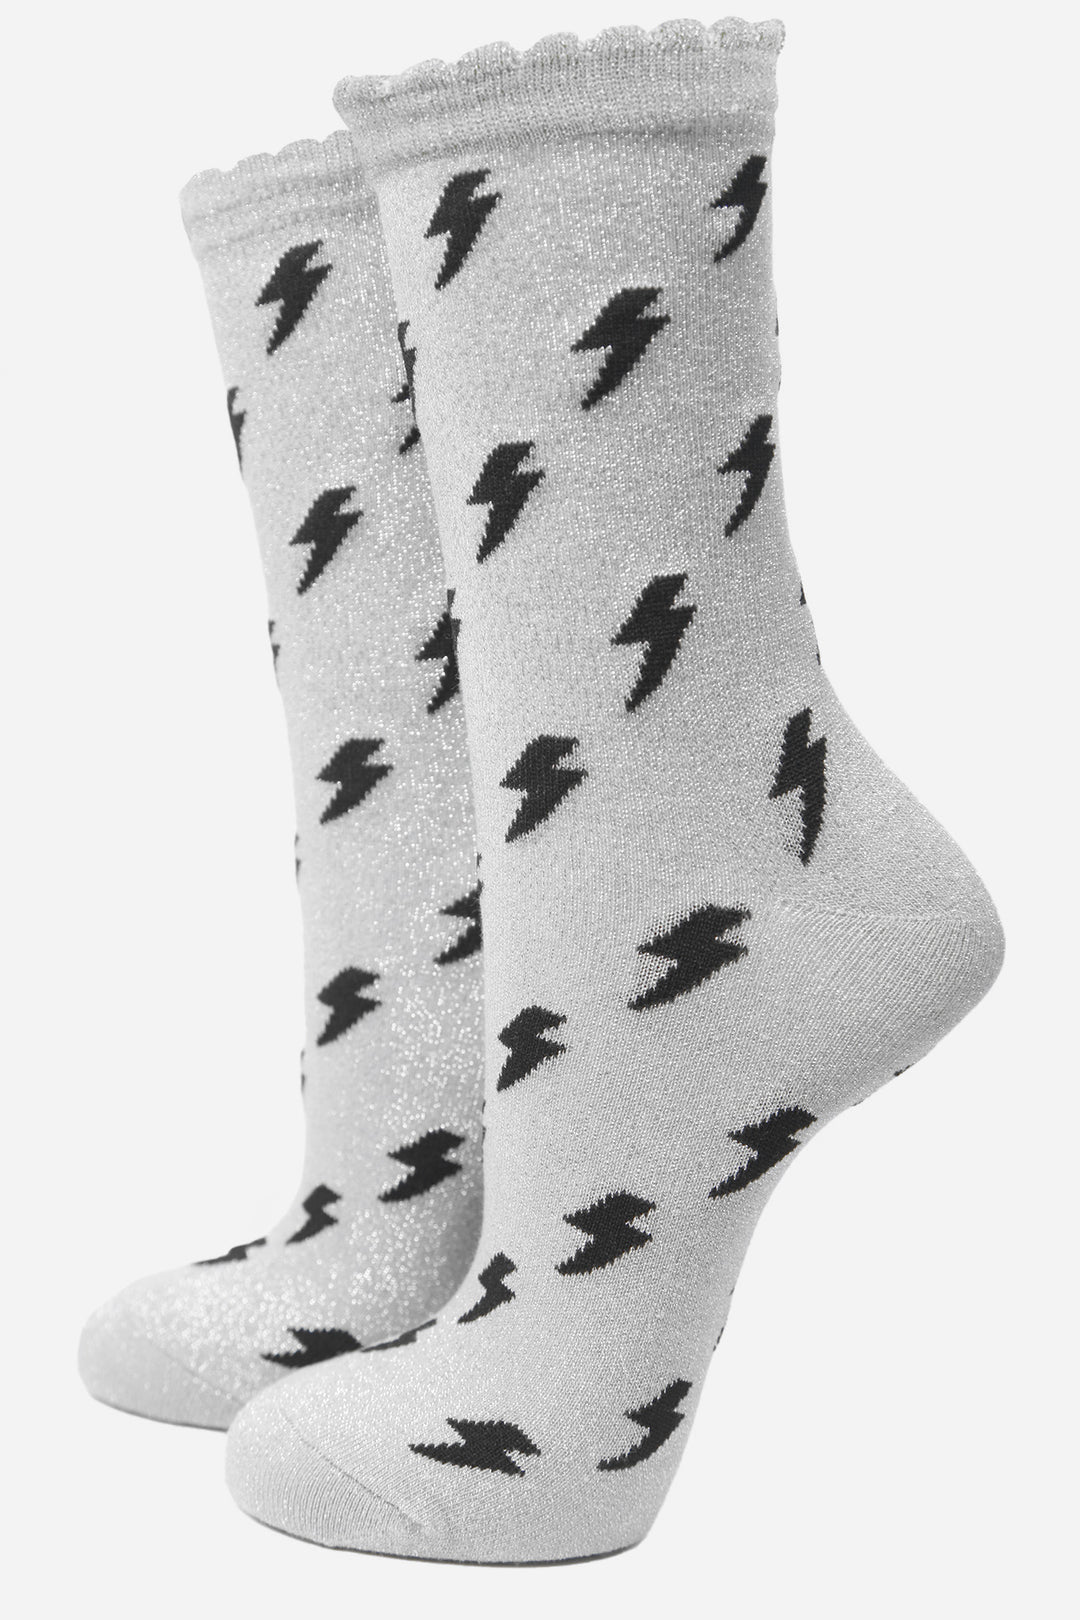 Light Grey Black Lightning Bolt Glitter Socks with Scalloped Cuffs